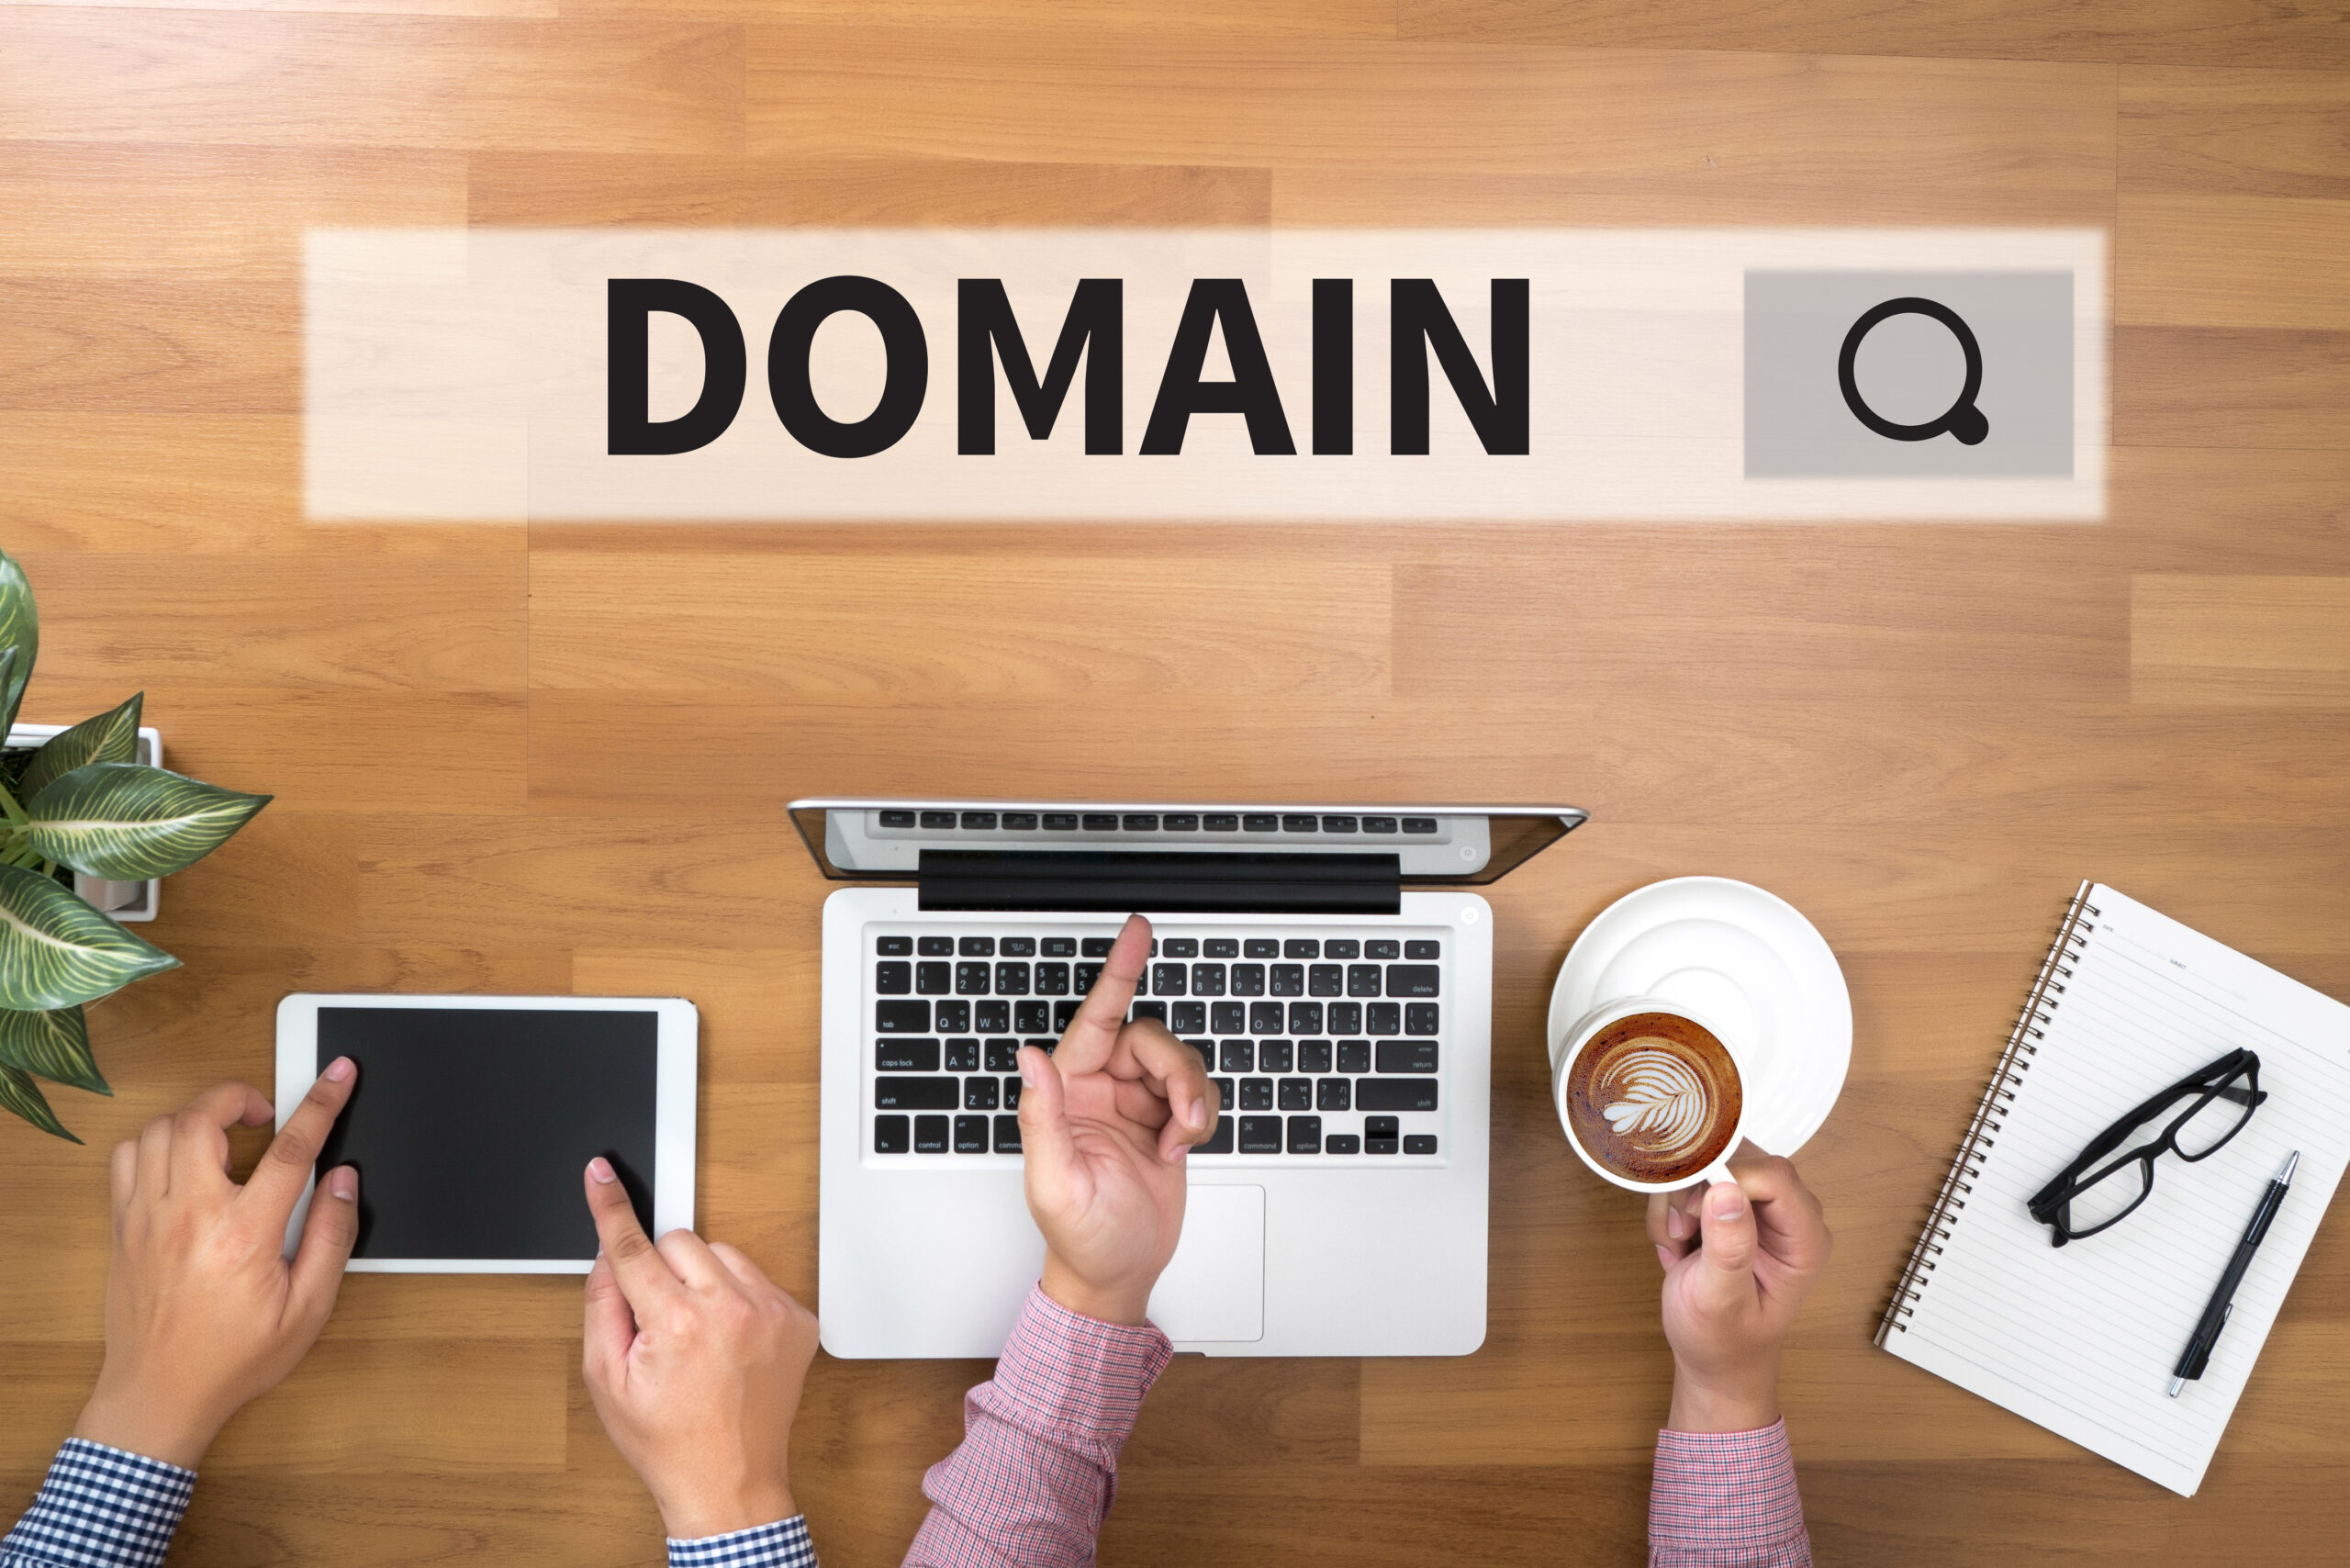 9 Tips to Choose a Good Domain Name